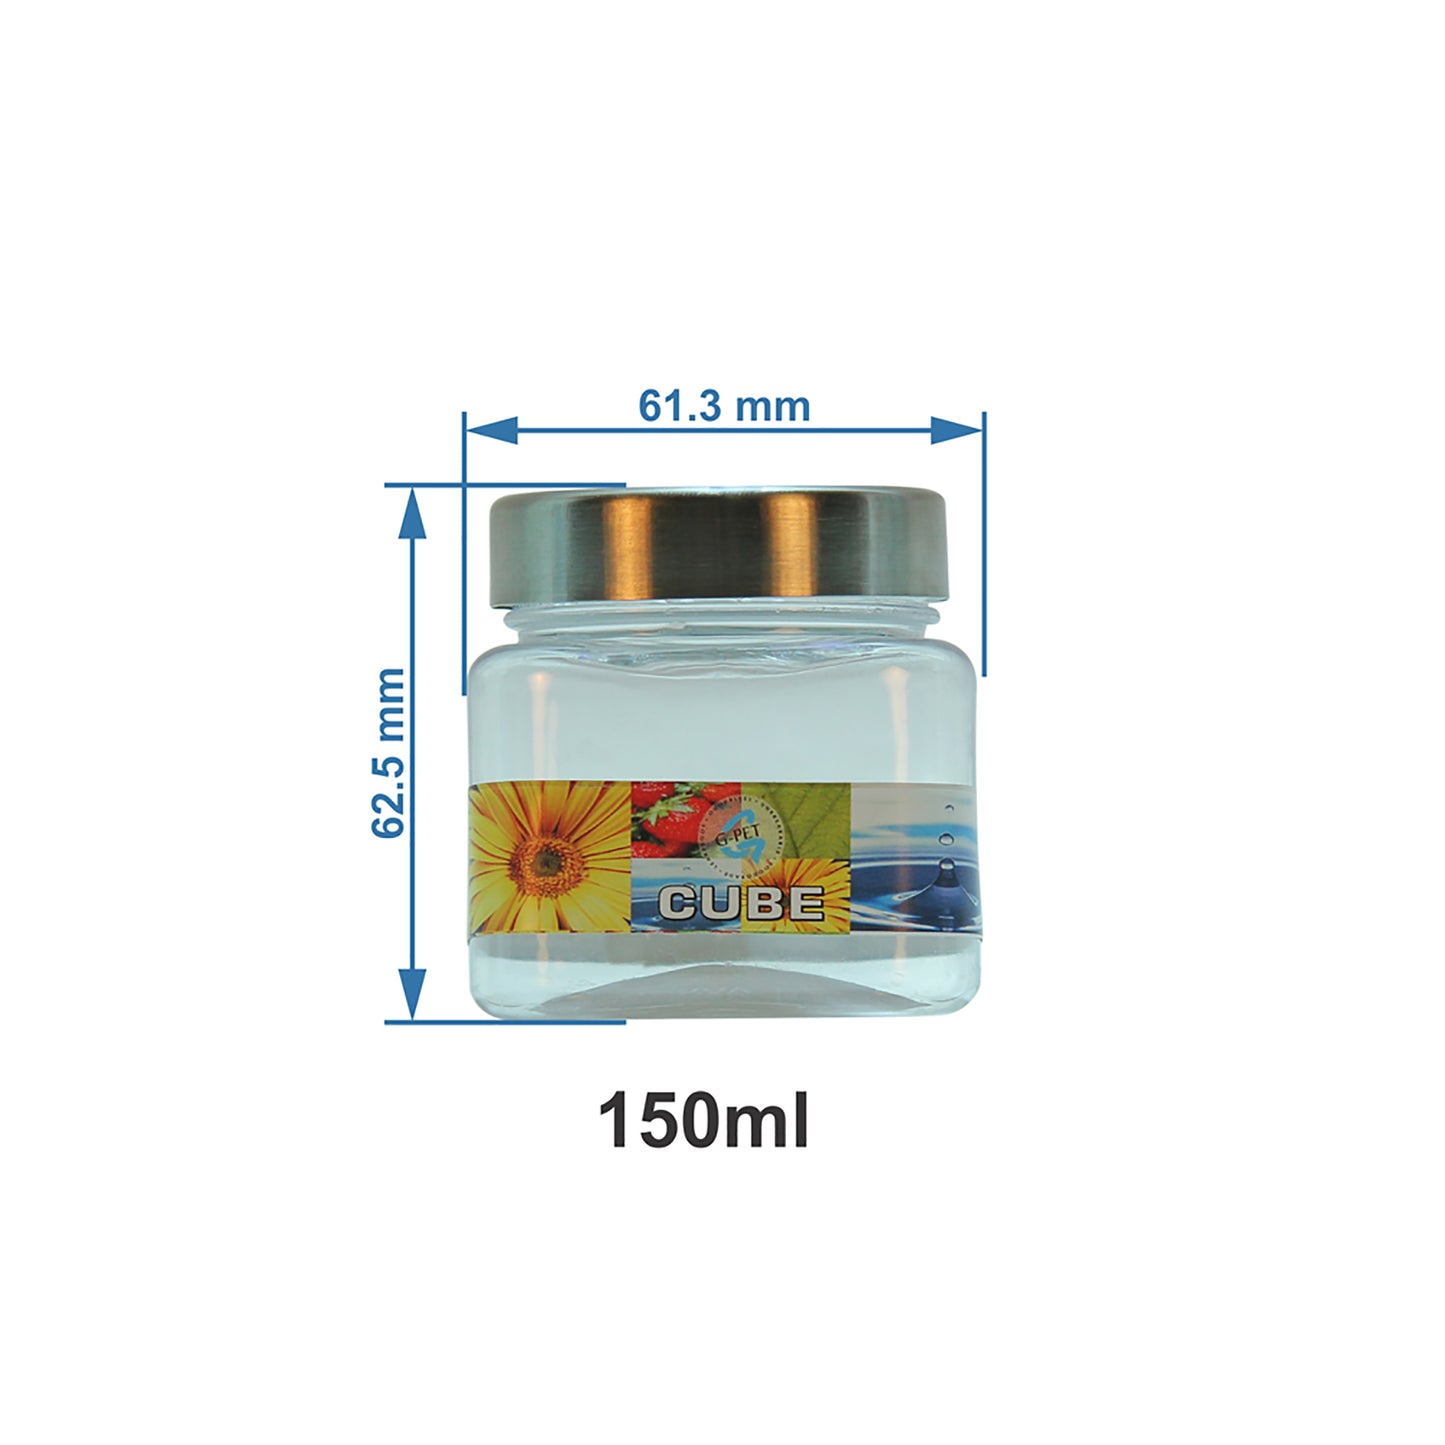 Cube PET Jar / Container PET Plastic Airtight Container with Steel Cap (3, 150ML)